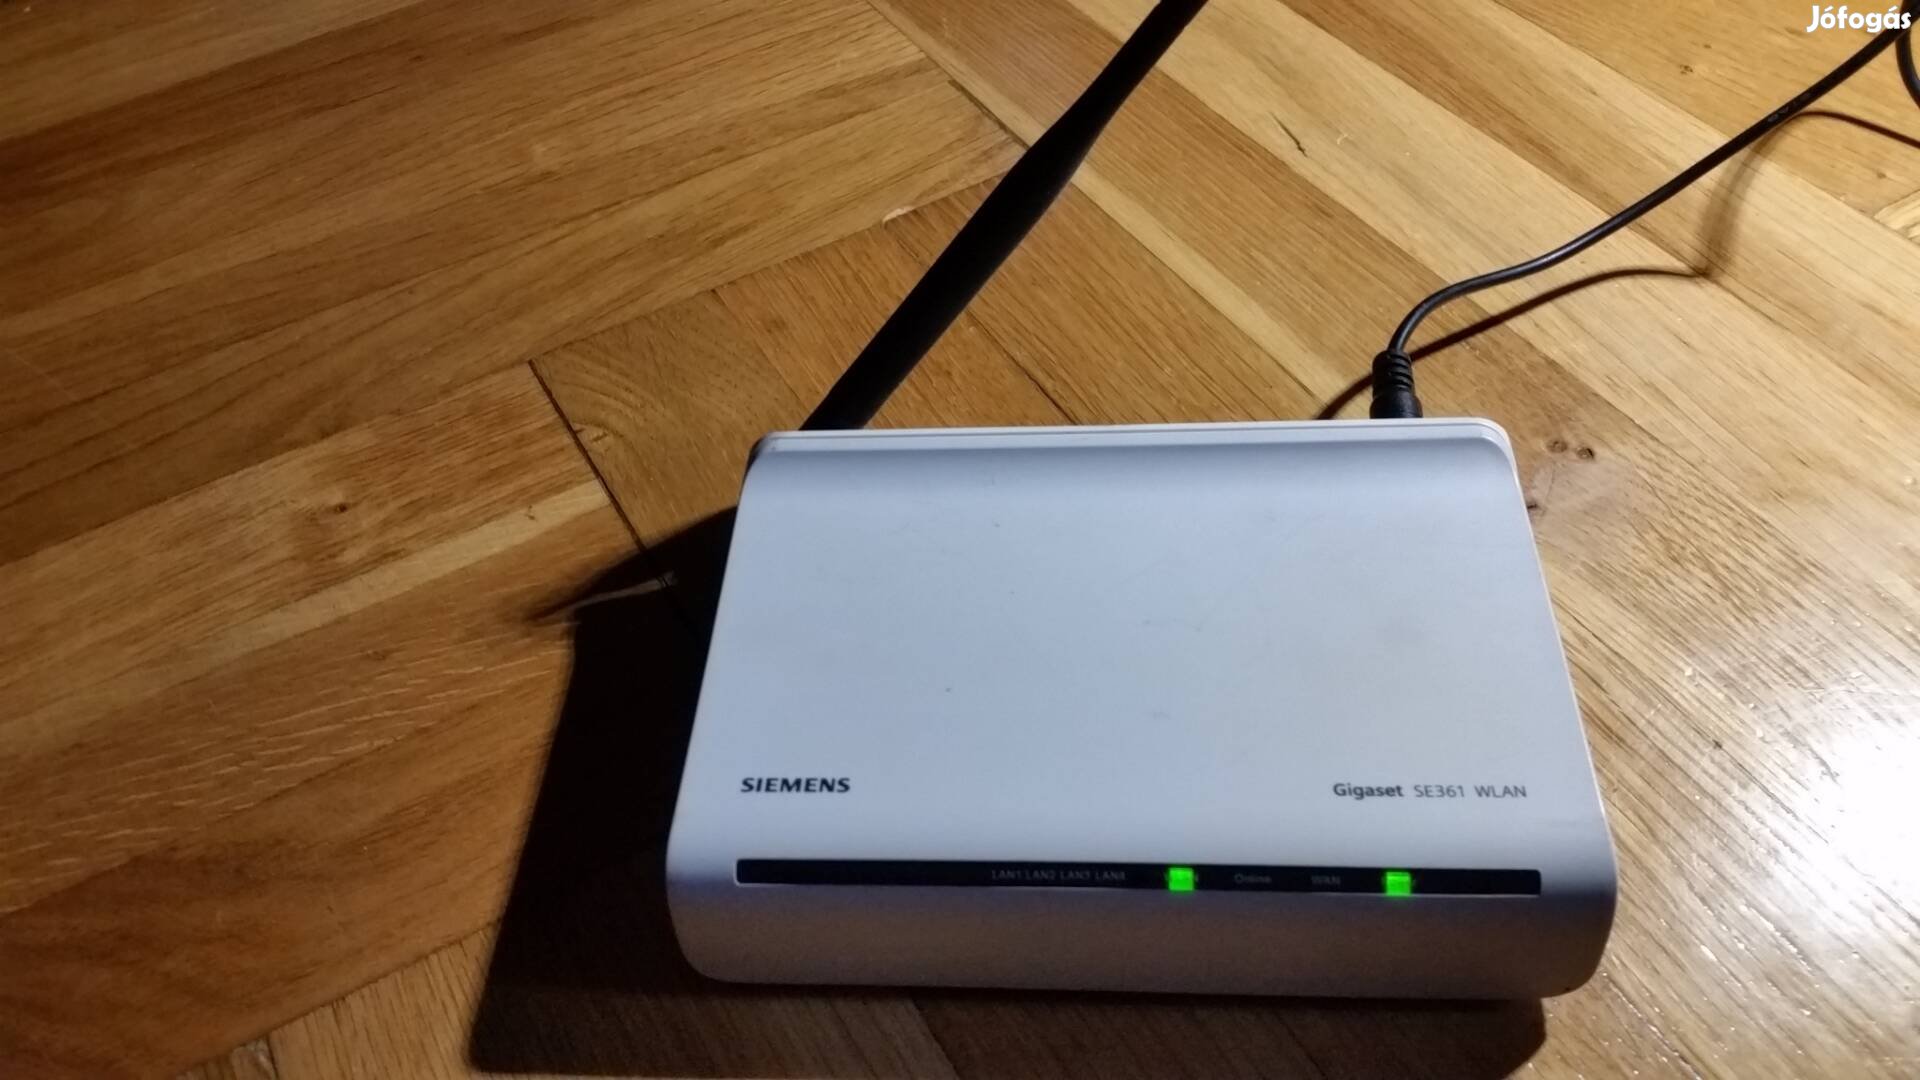 Siemens gigaset wifi router 